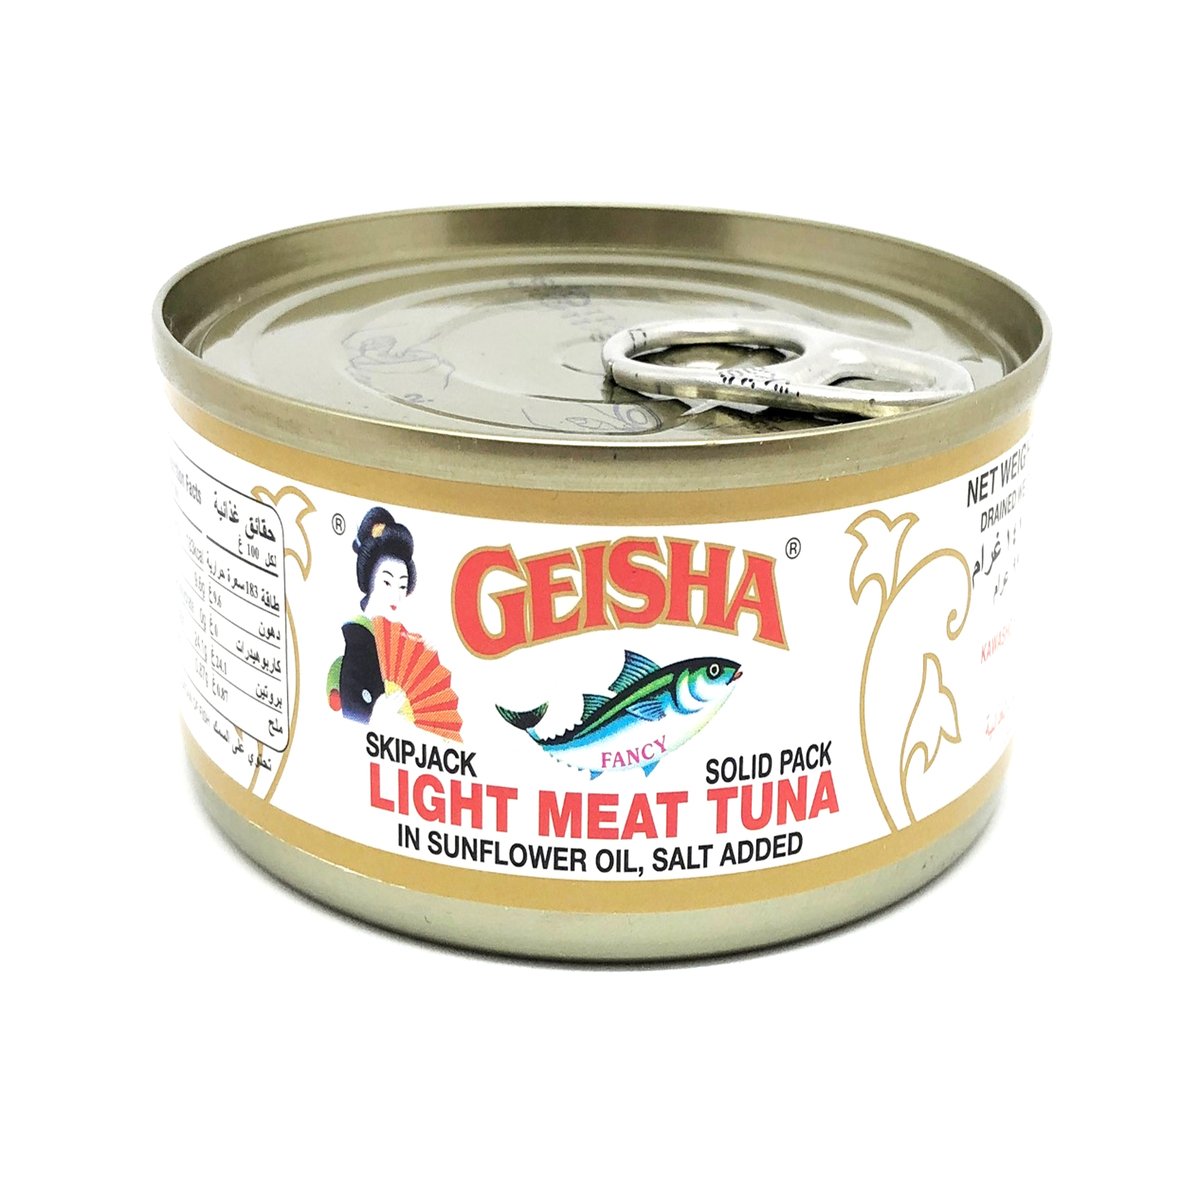 Geisha Skip Jack Light Meat Tuna in Sunflower Oil 90g